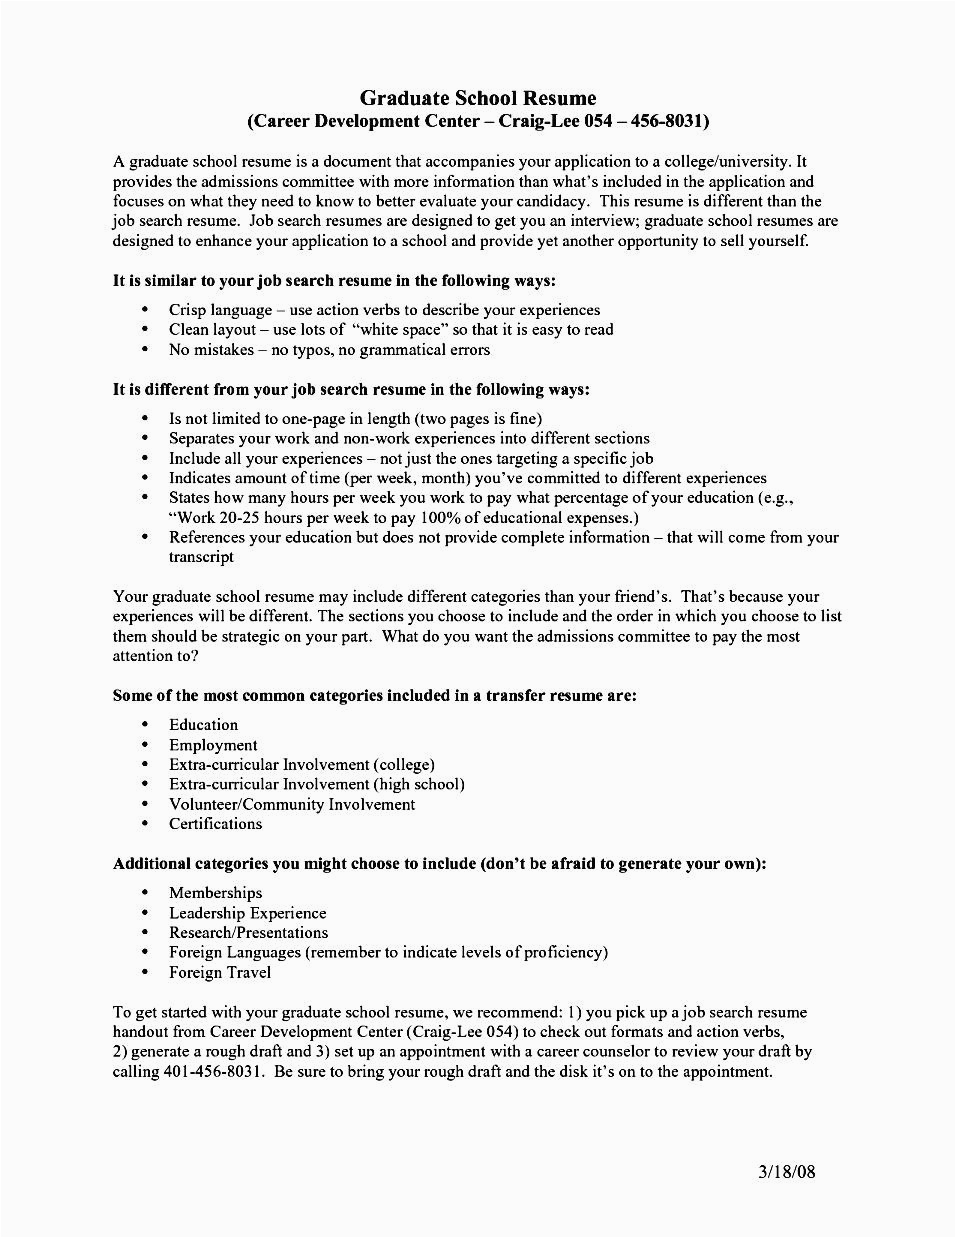 Sample Academic Resume for Graduate School Academic Resume for Graduate School